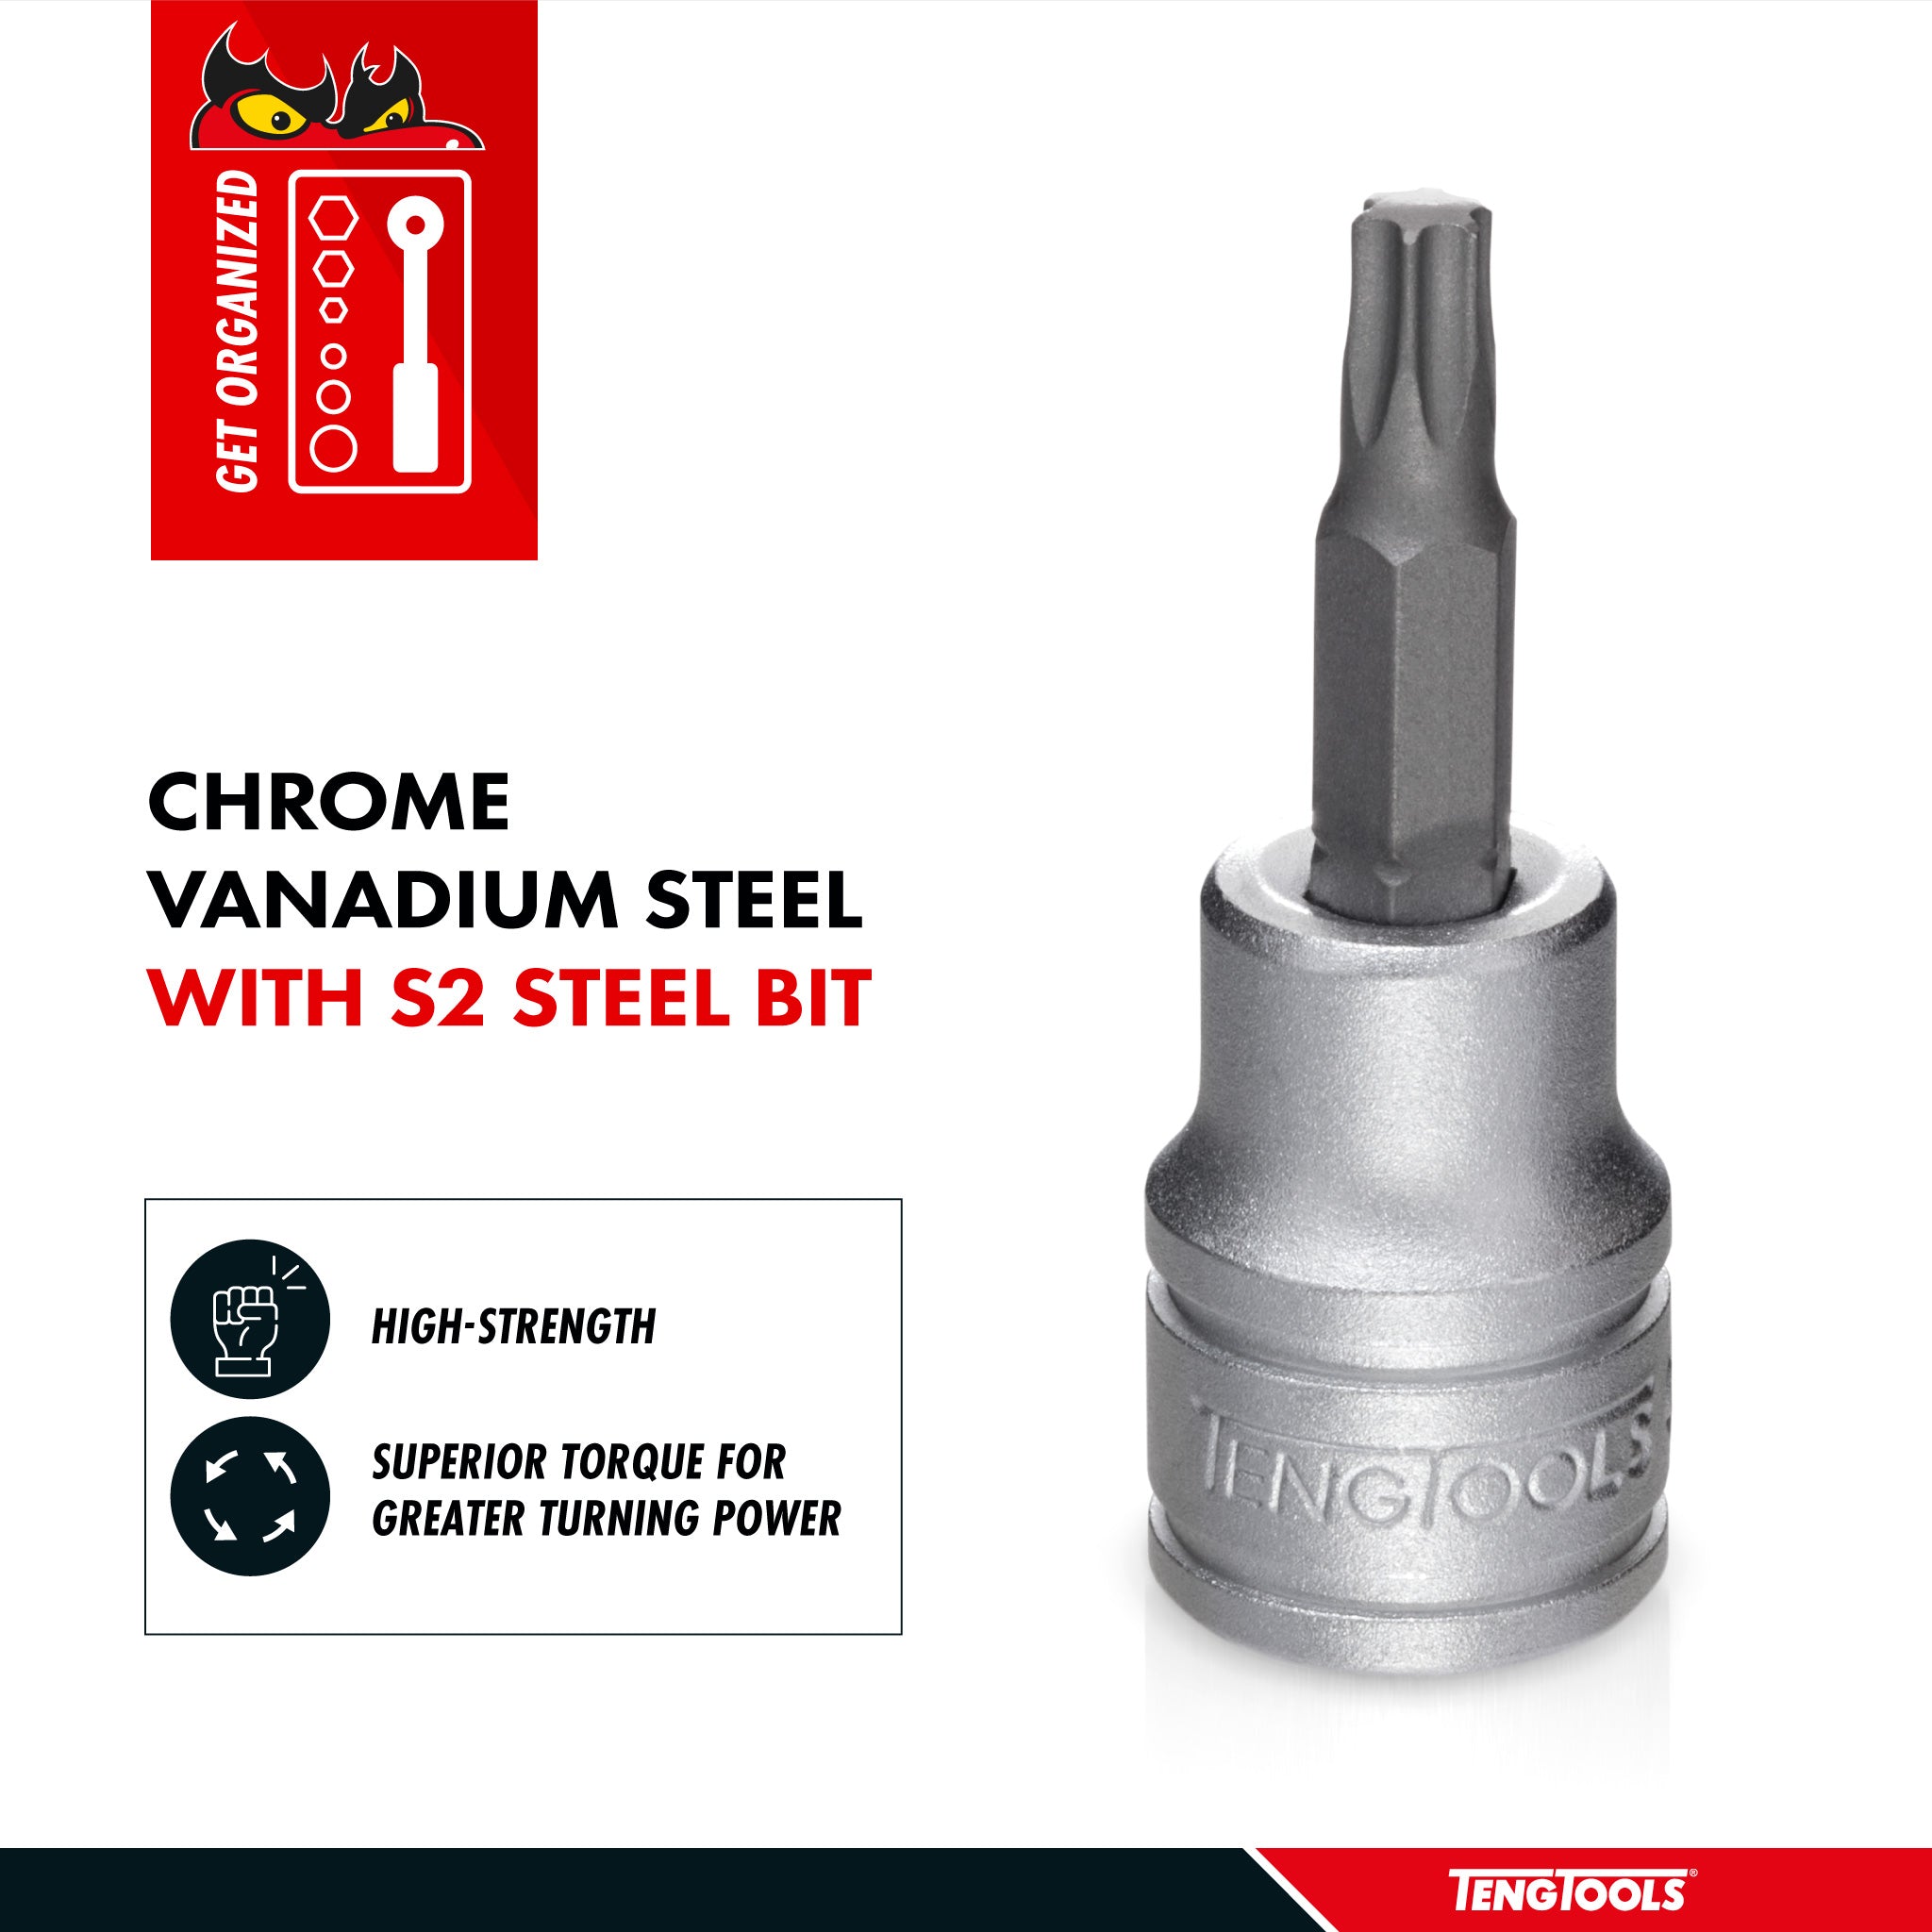 Teng Tools 1/2 Inch Drive Metric Torx TX Chrome Vanadium Sockets - TX60